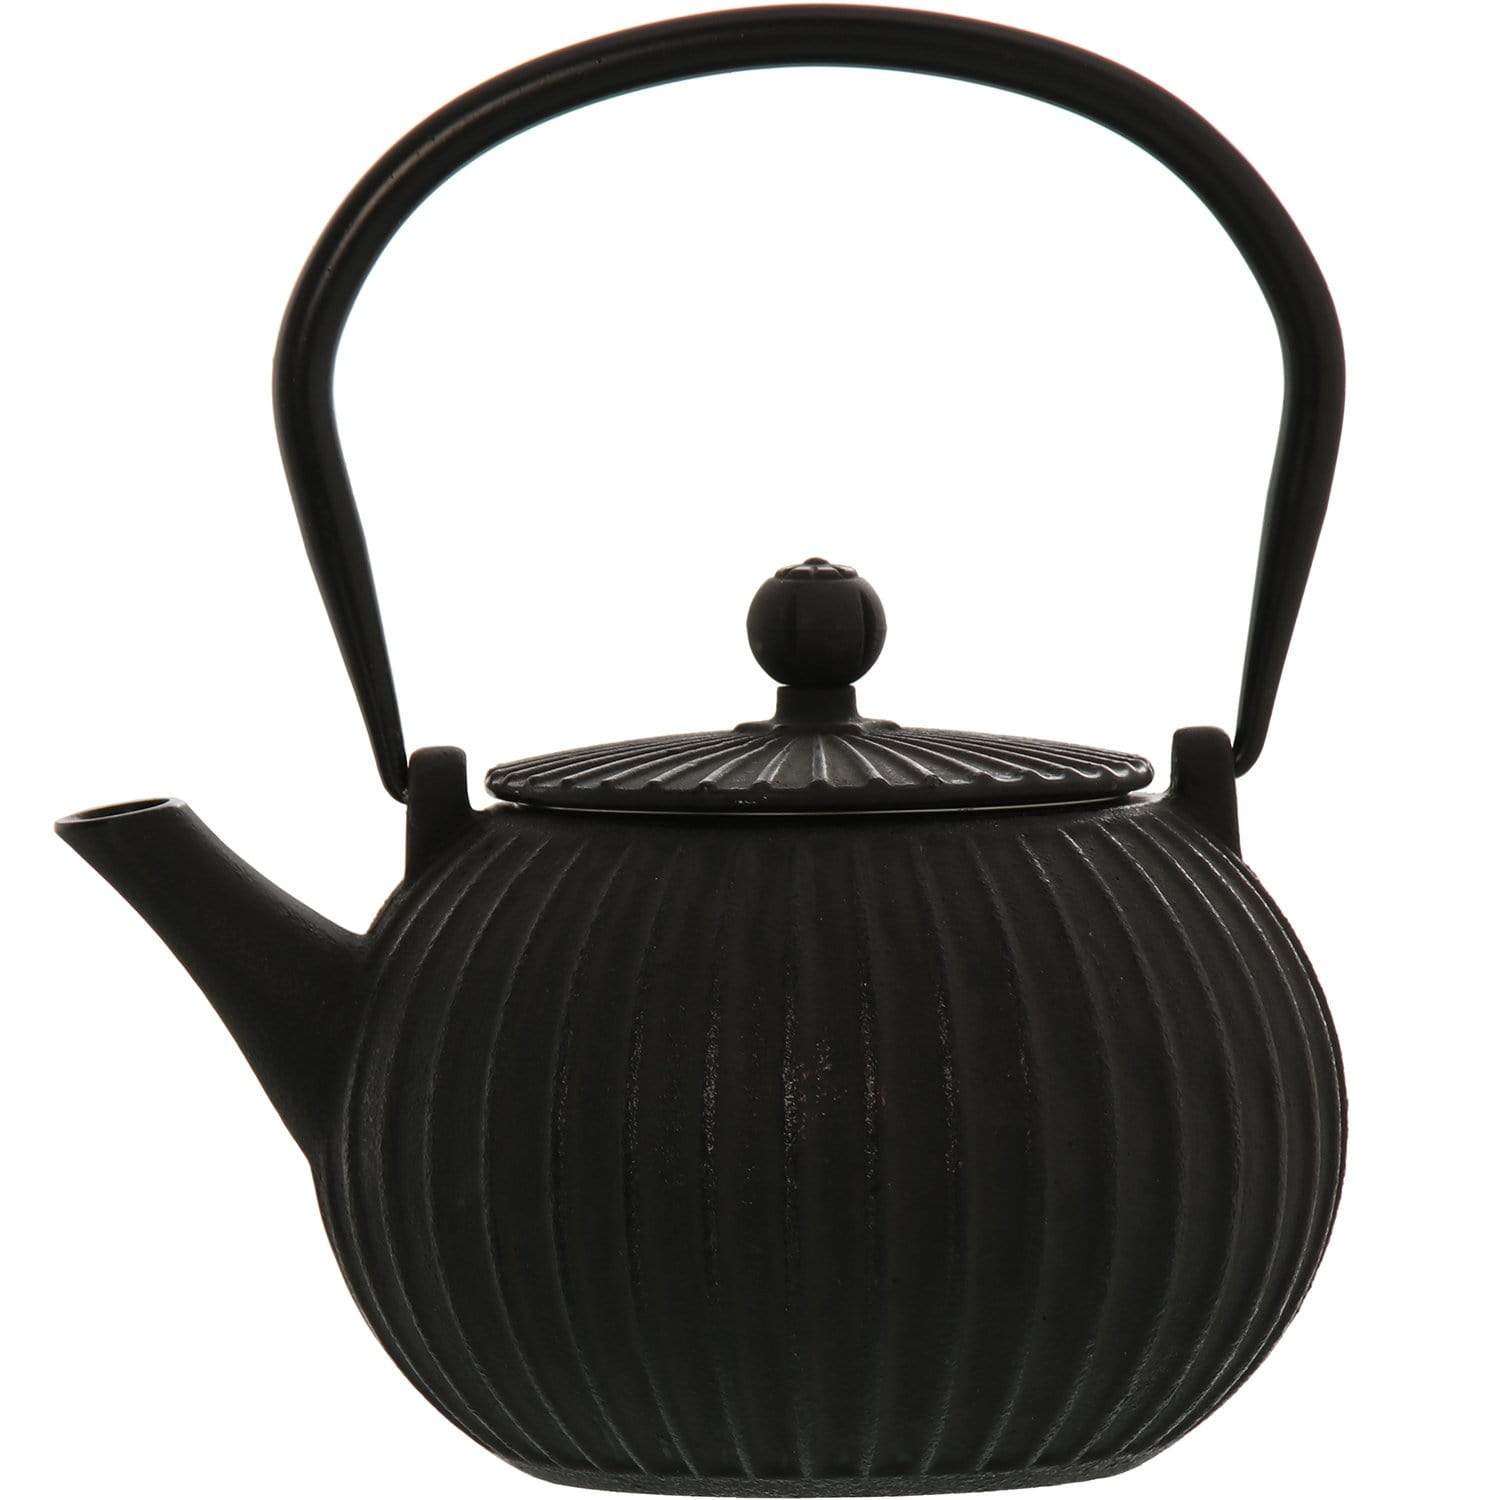 Teiera Giapponese in ghisa colore nero linee 1500 cl per tè e tisane - Dolci pensieri gift